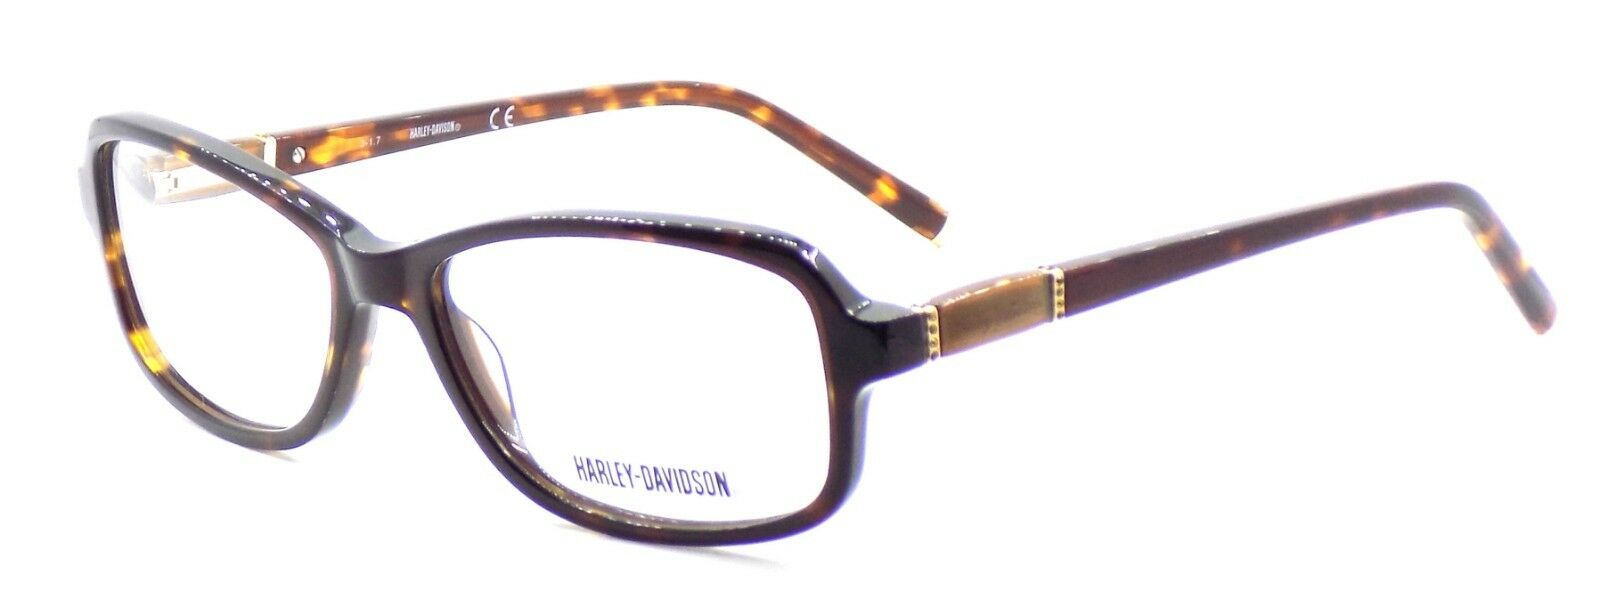 1-Harley Davidson HD0537 052 Women's Eyeglasses Frames 54-16-135 Dark Havana +Case-664689889143-IKSpecs